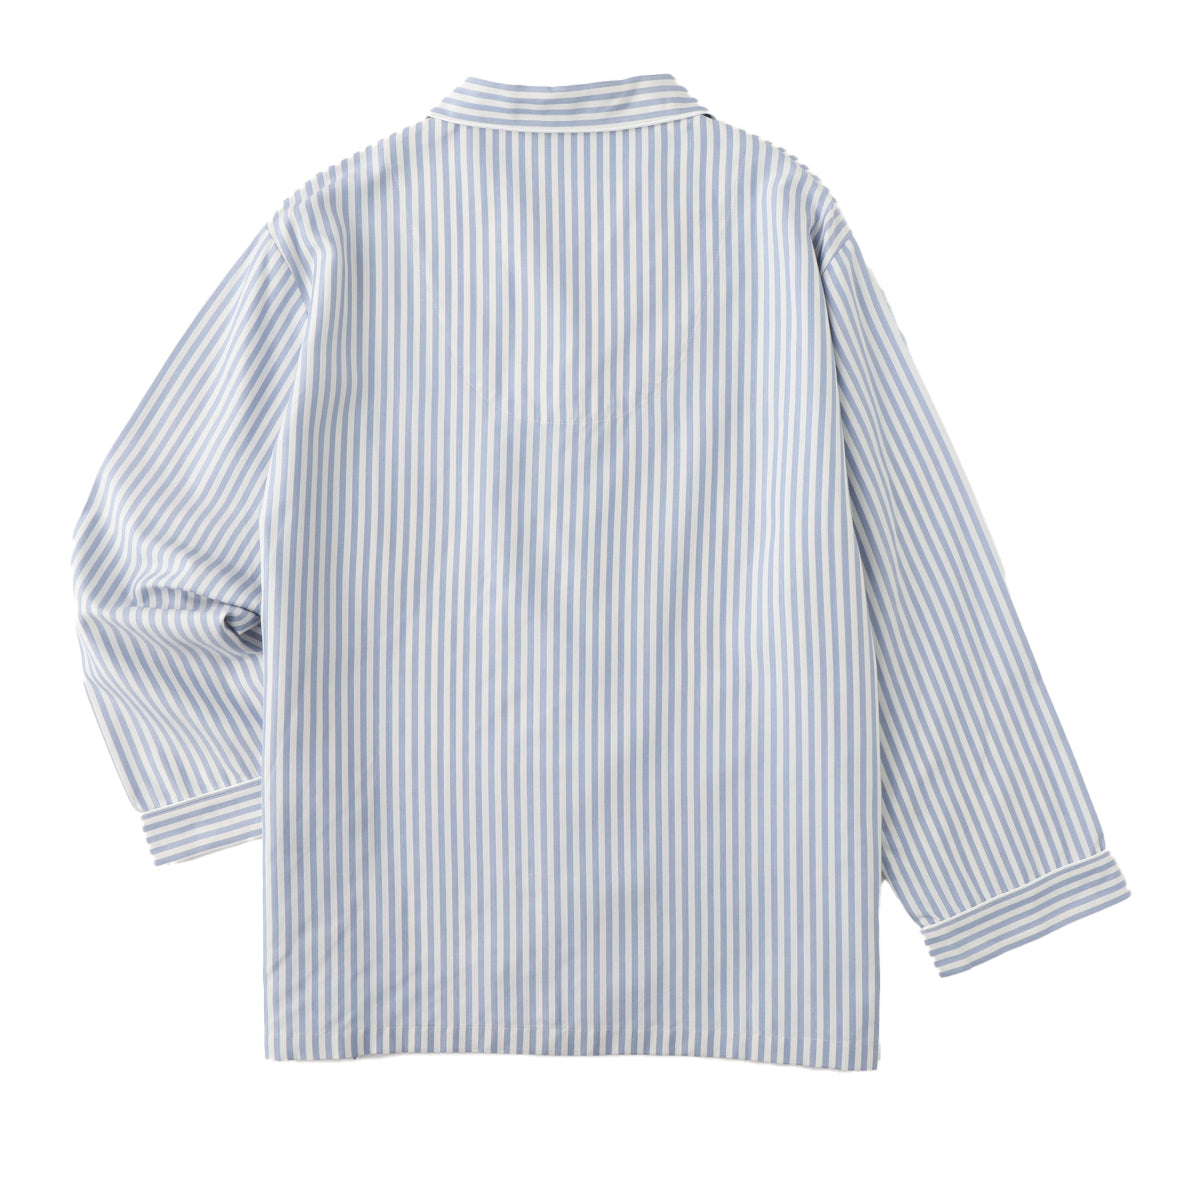 Silk Striped Pajama Set (SAX BLUE)